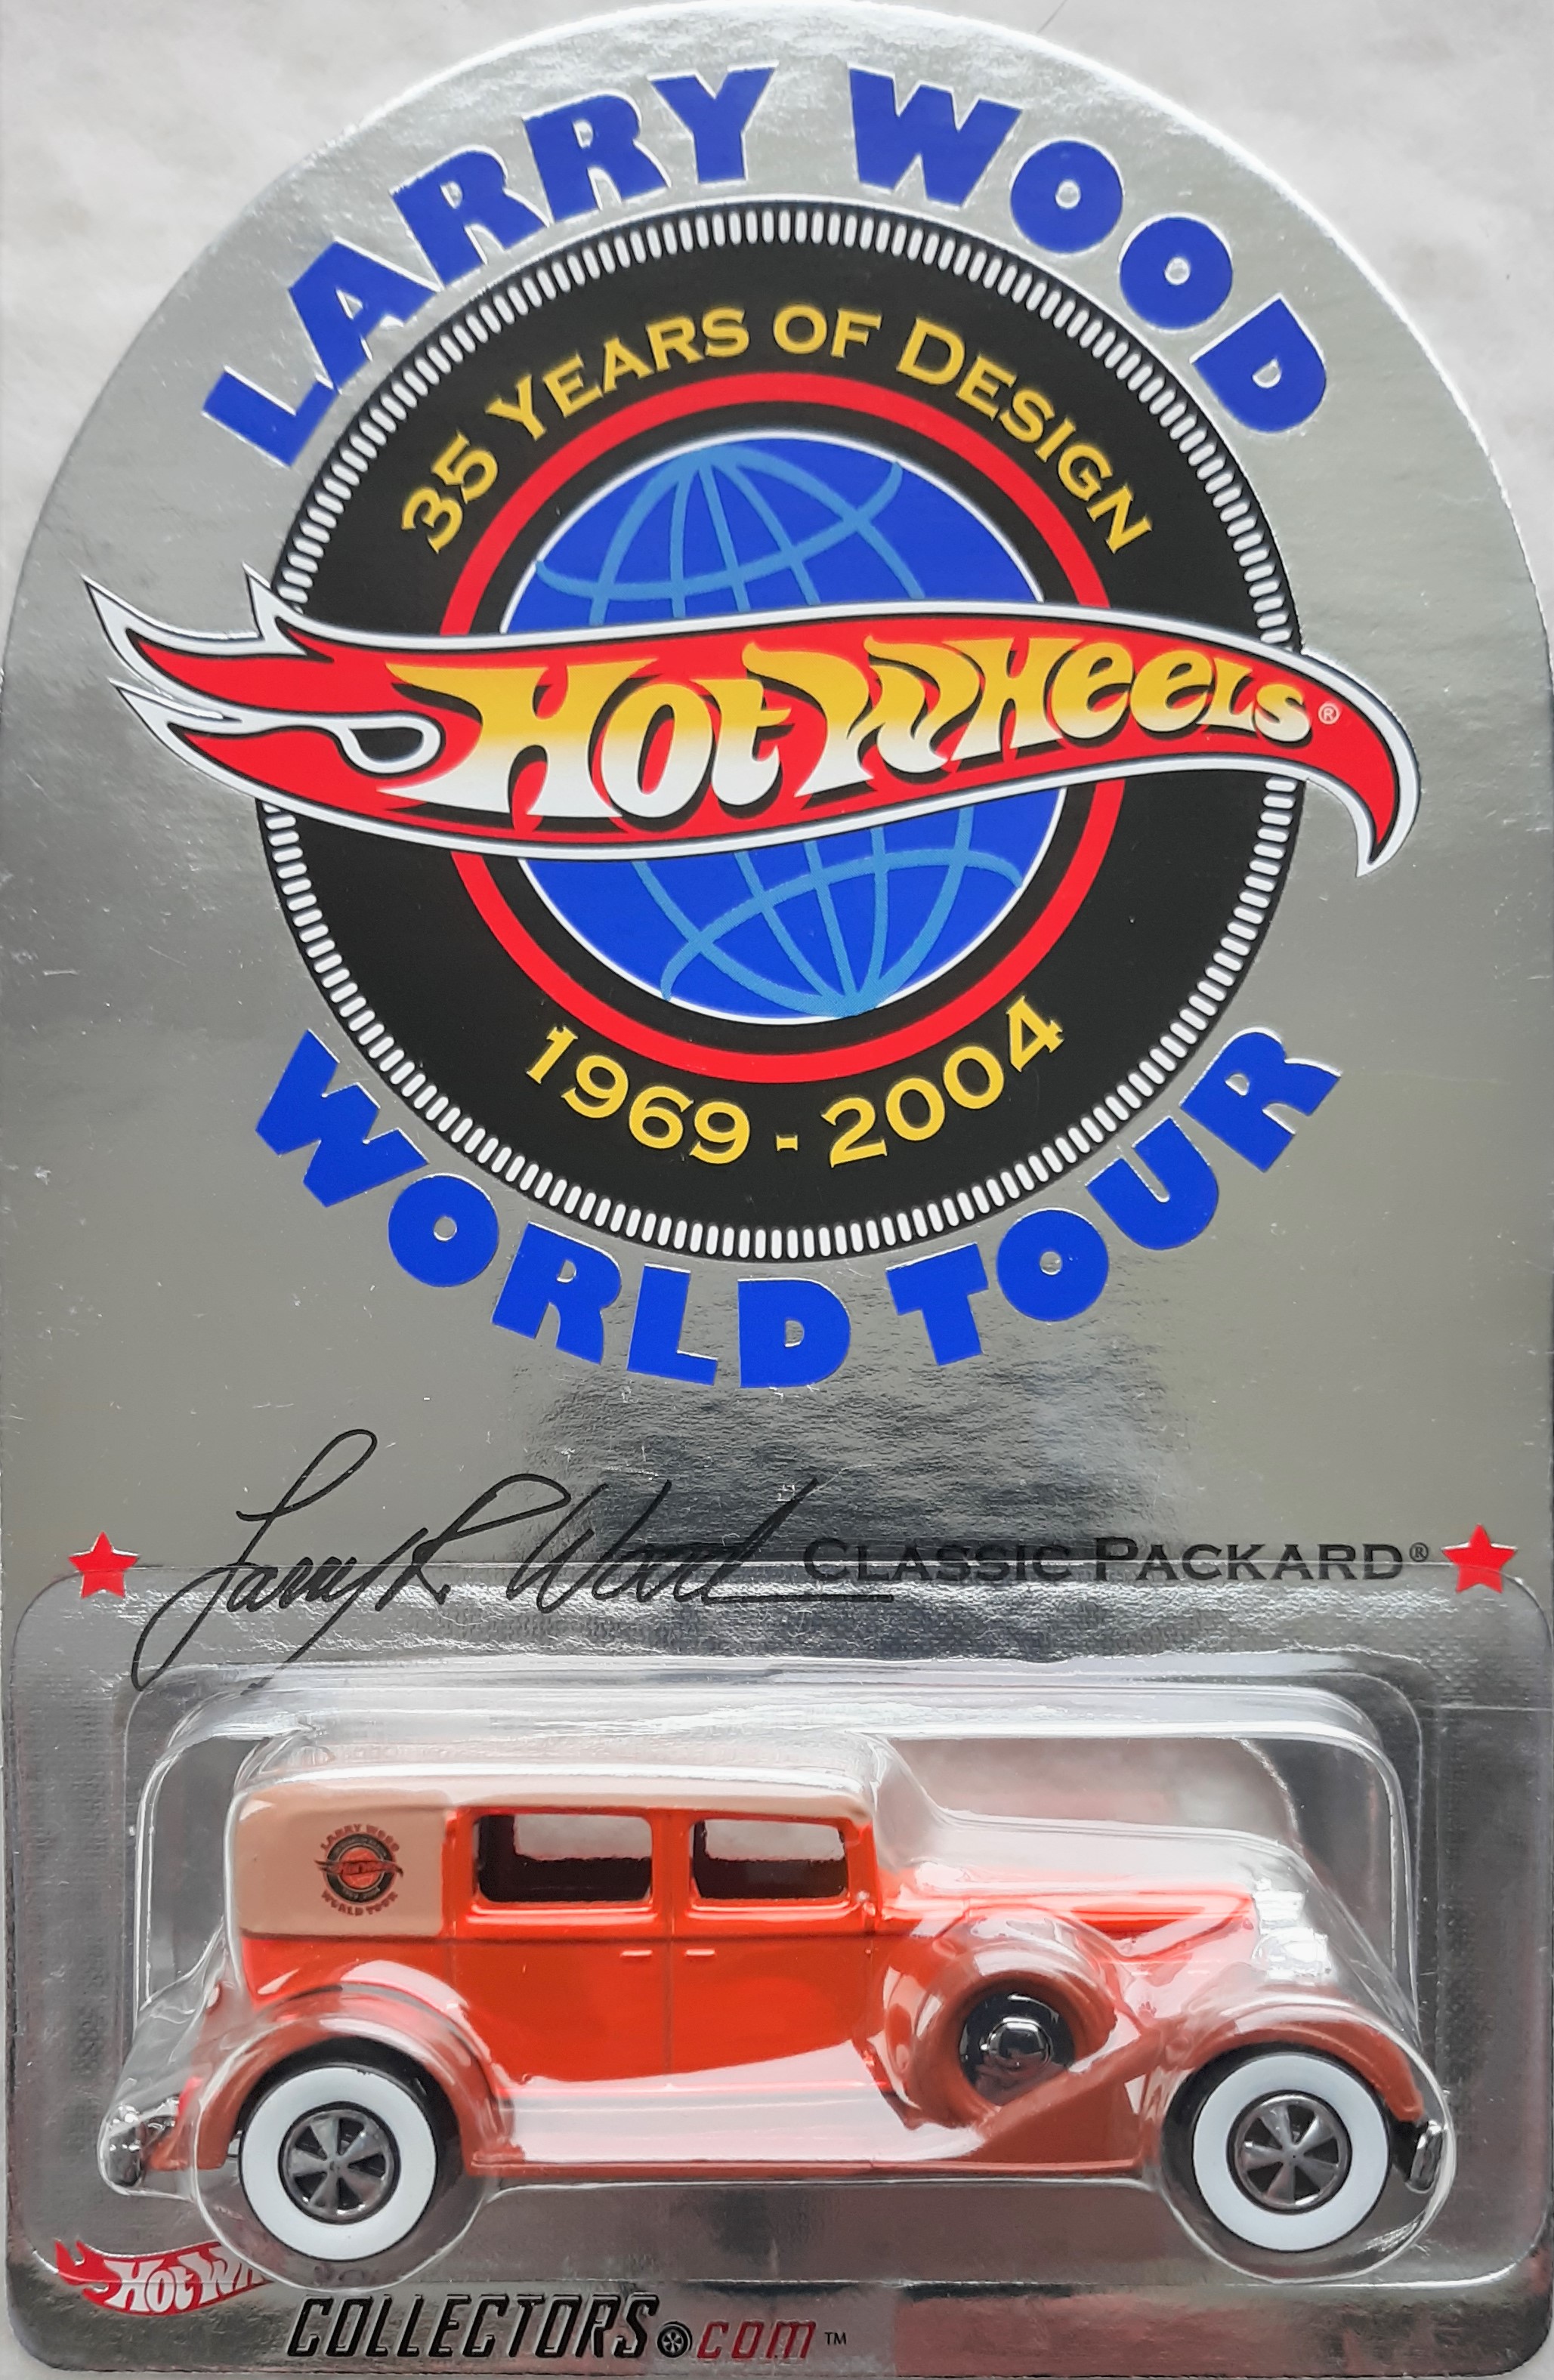 Larry Wood World Tour 4-Car Set | Hot Wheels Wiki | Fandom